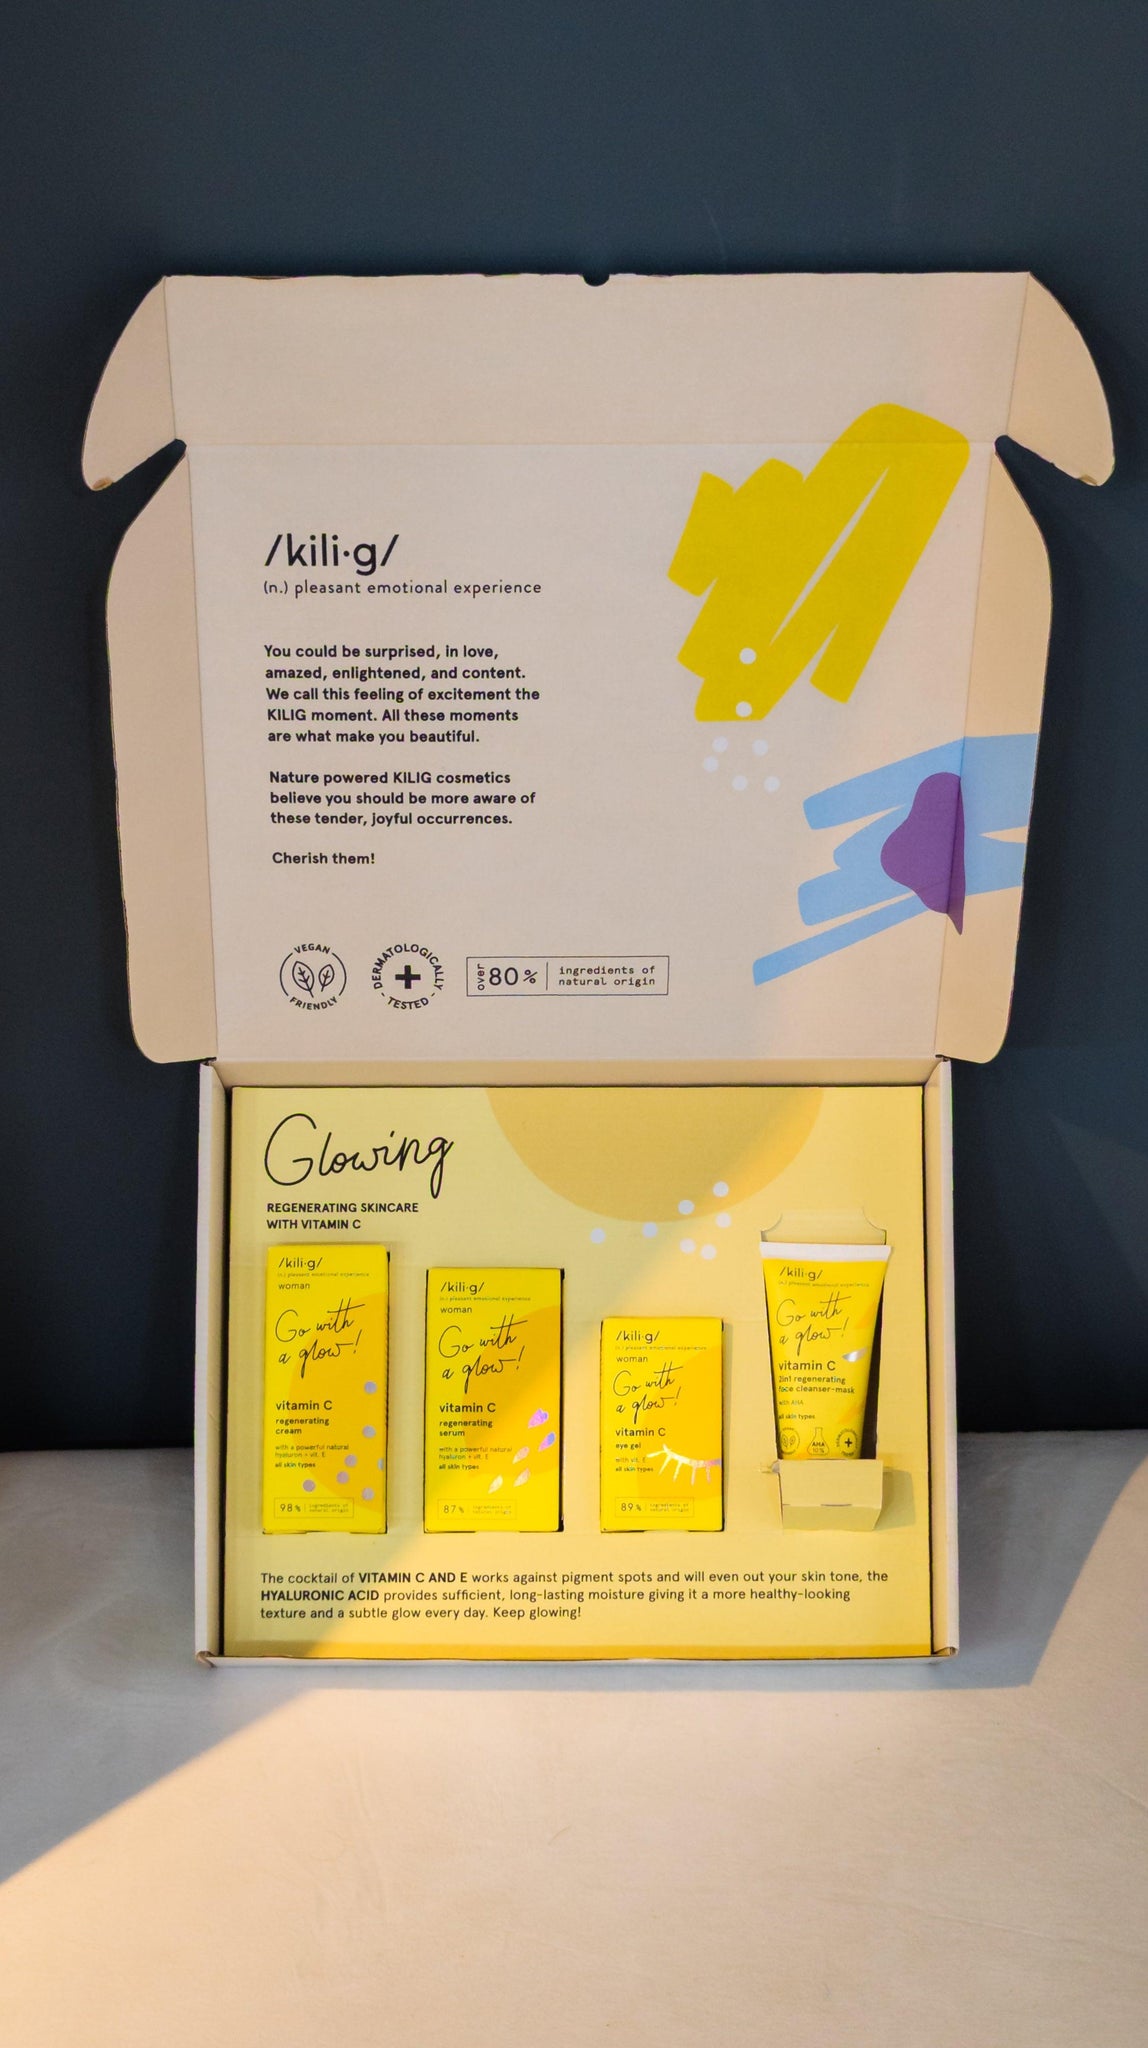 Kili.g Vitamin C Gift Set - Limited Edition - Mrayti Store